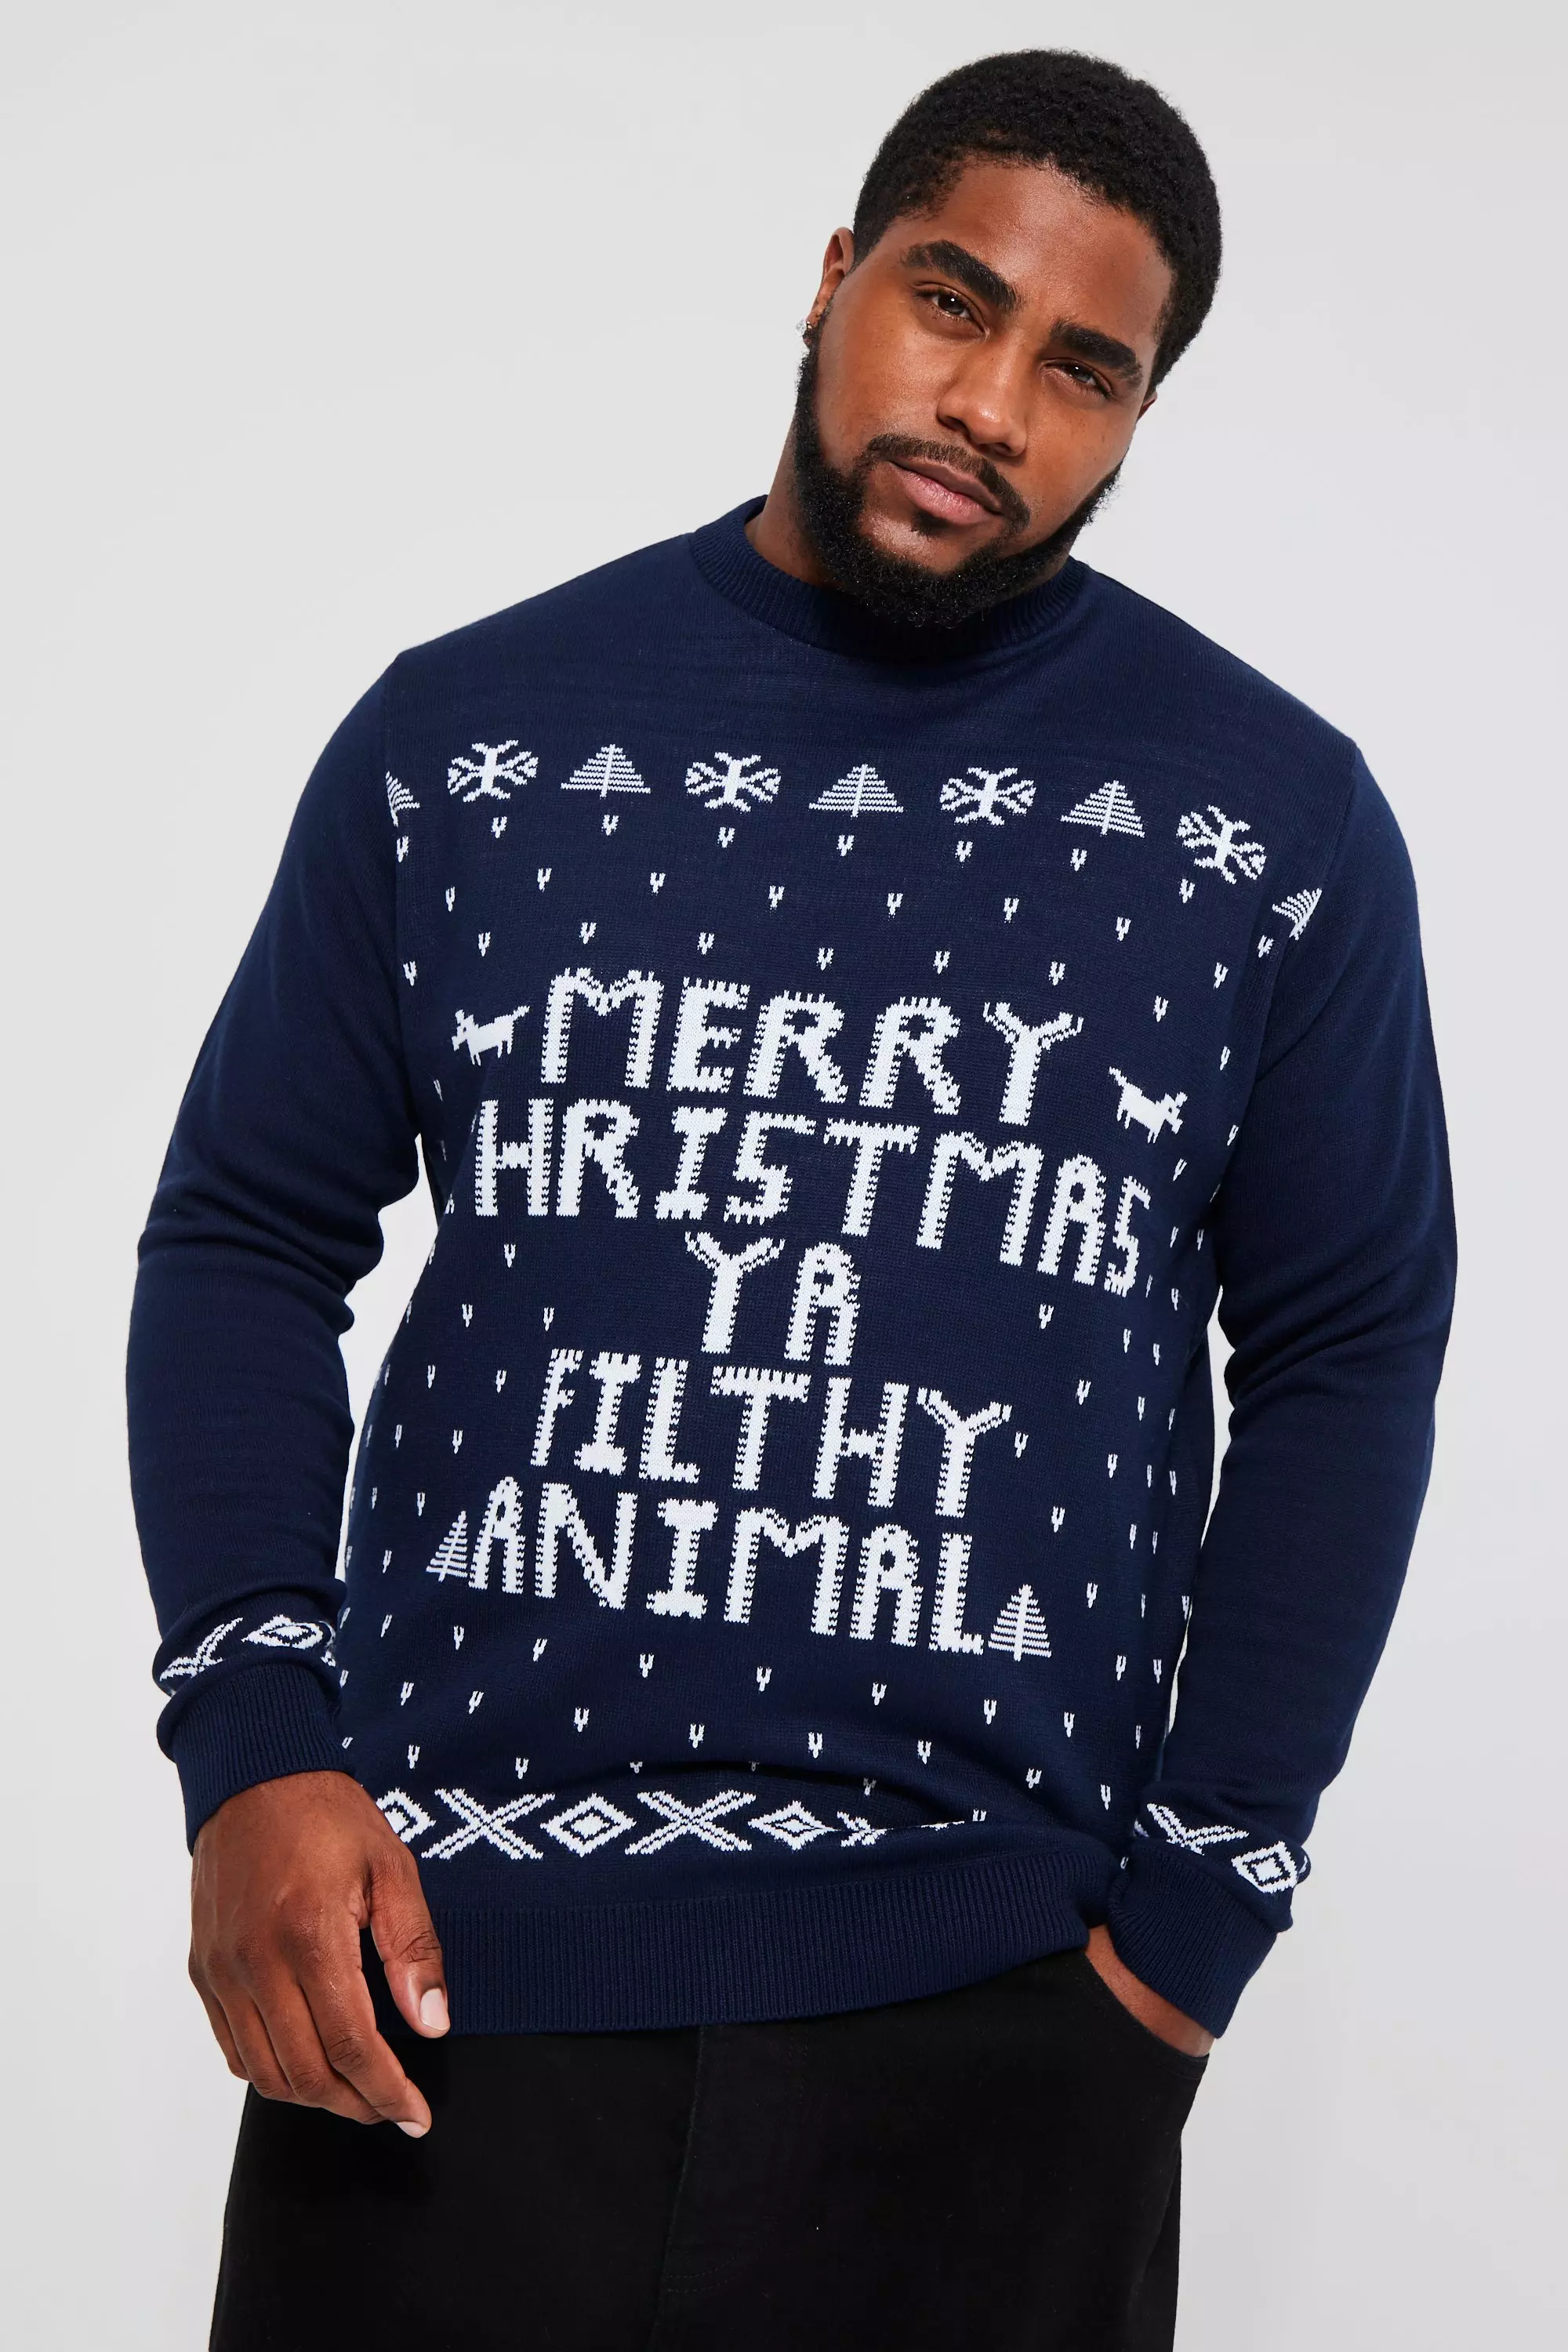 Plus Ya Filthy Animal Christmas Sweater Navy